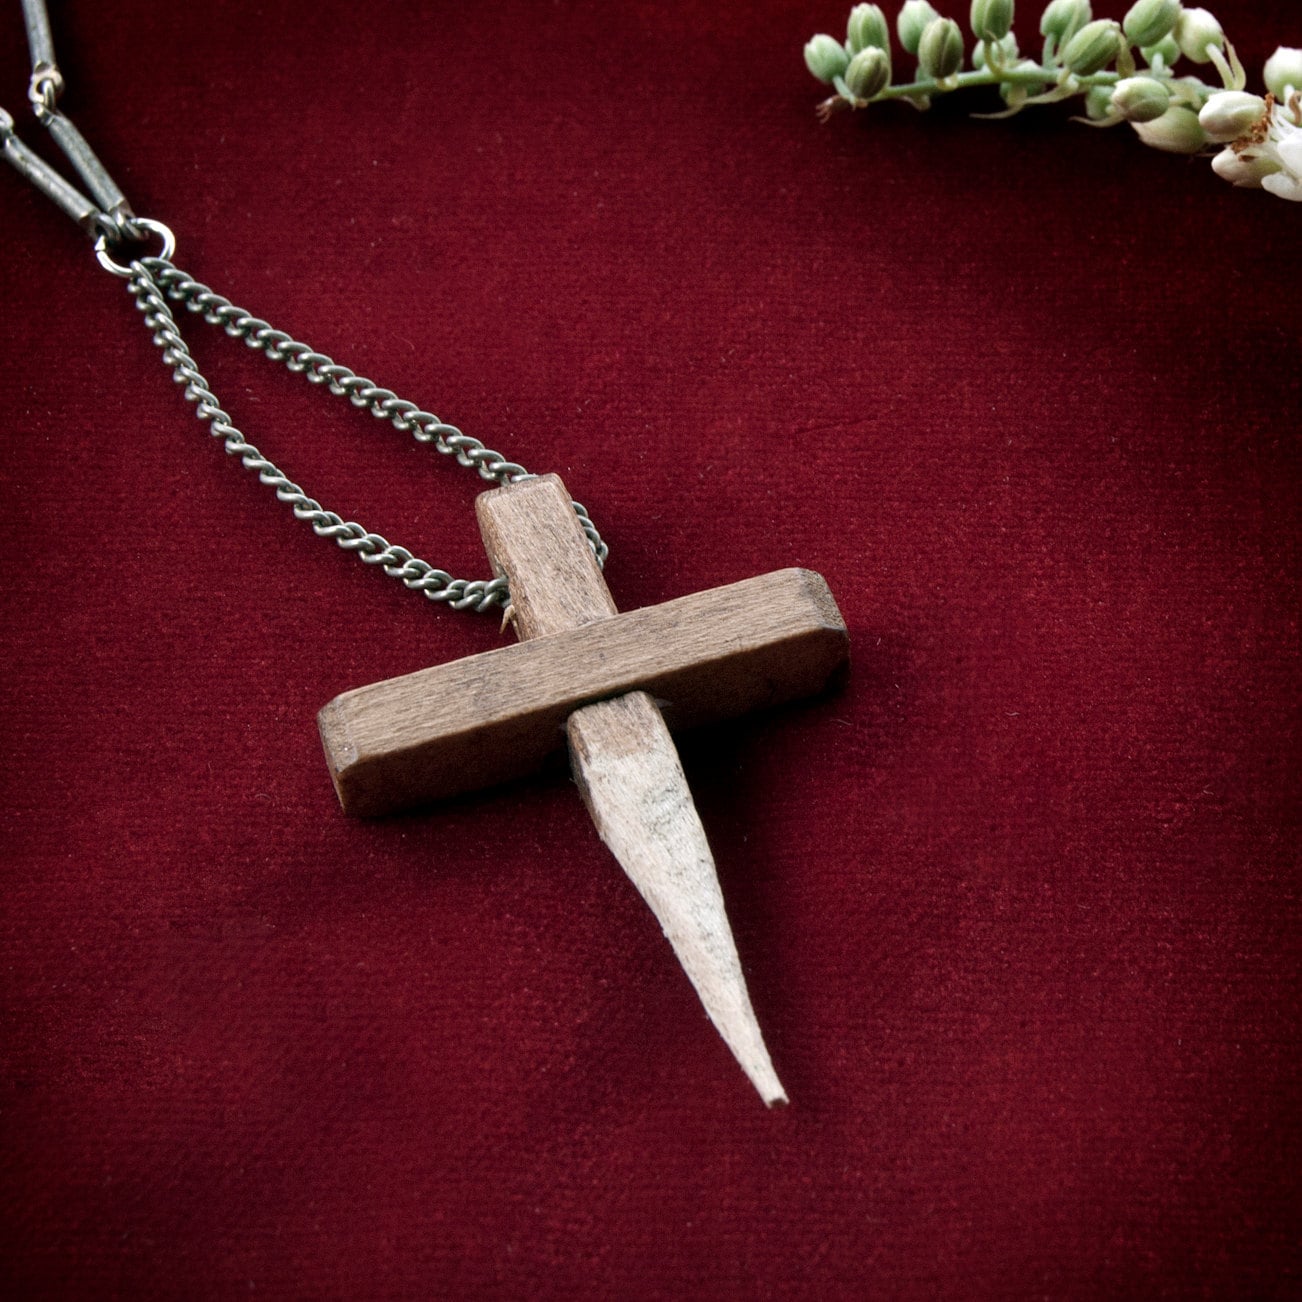 Vampire Hunter Wooden Cross Stake Necklace / Vampire by redheart13